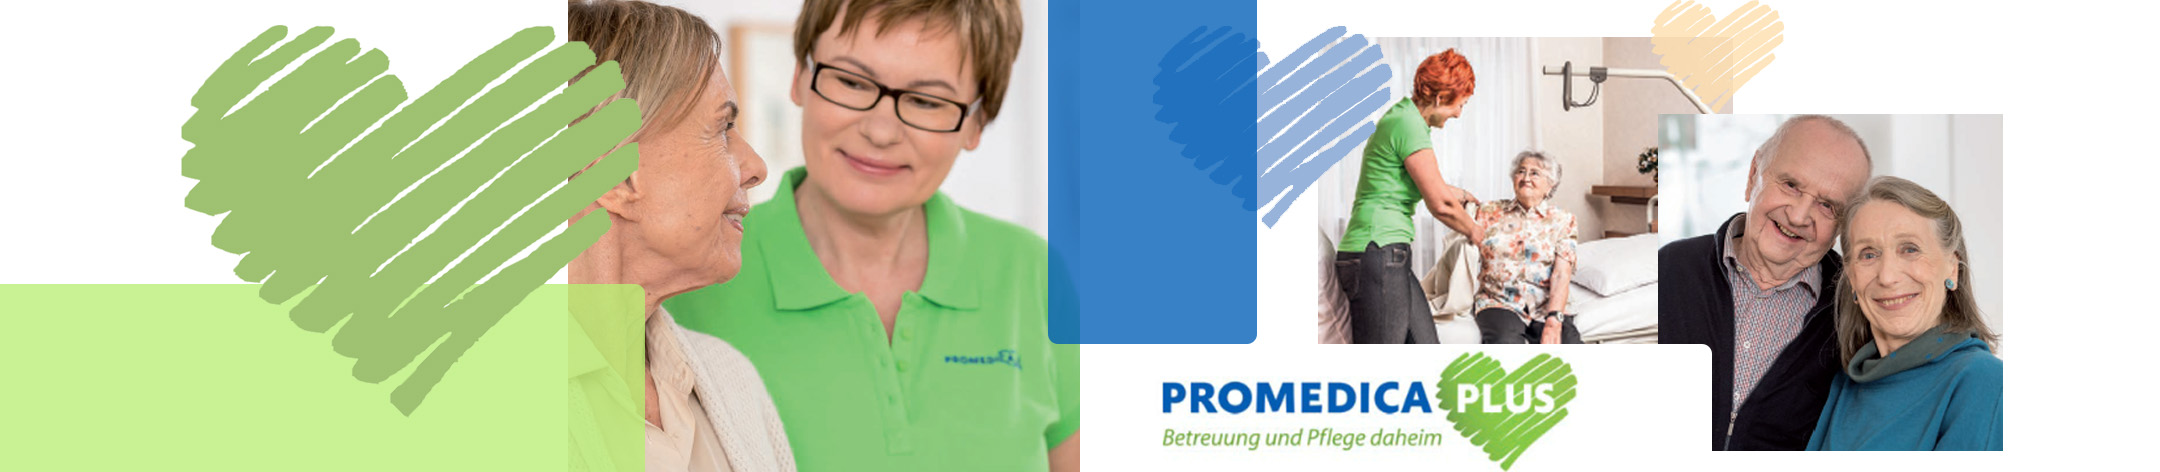 Promedica PLUS - Pflegekräfte aus Osteuropa